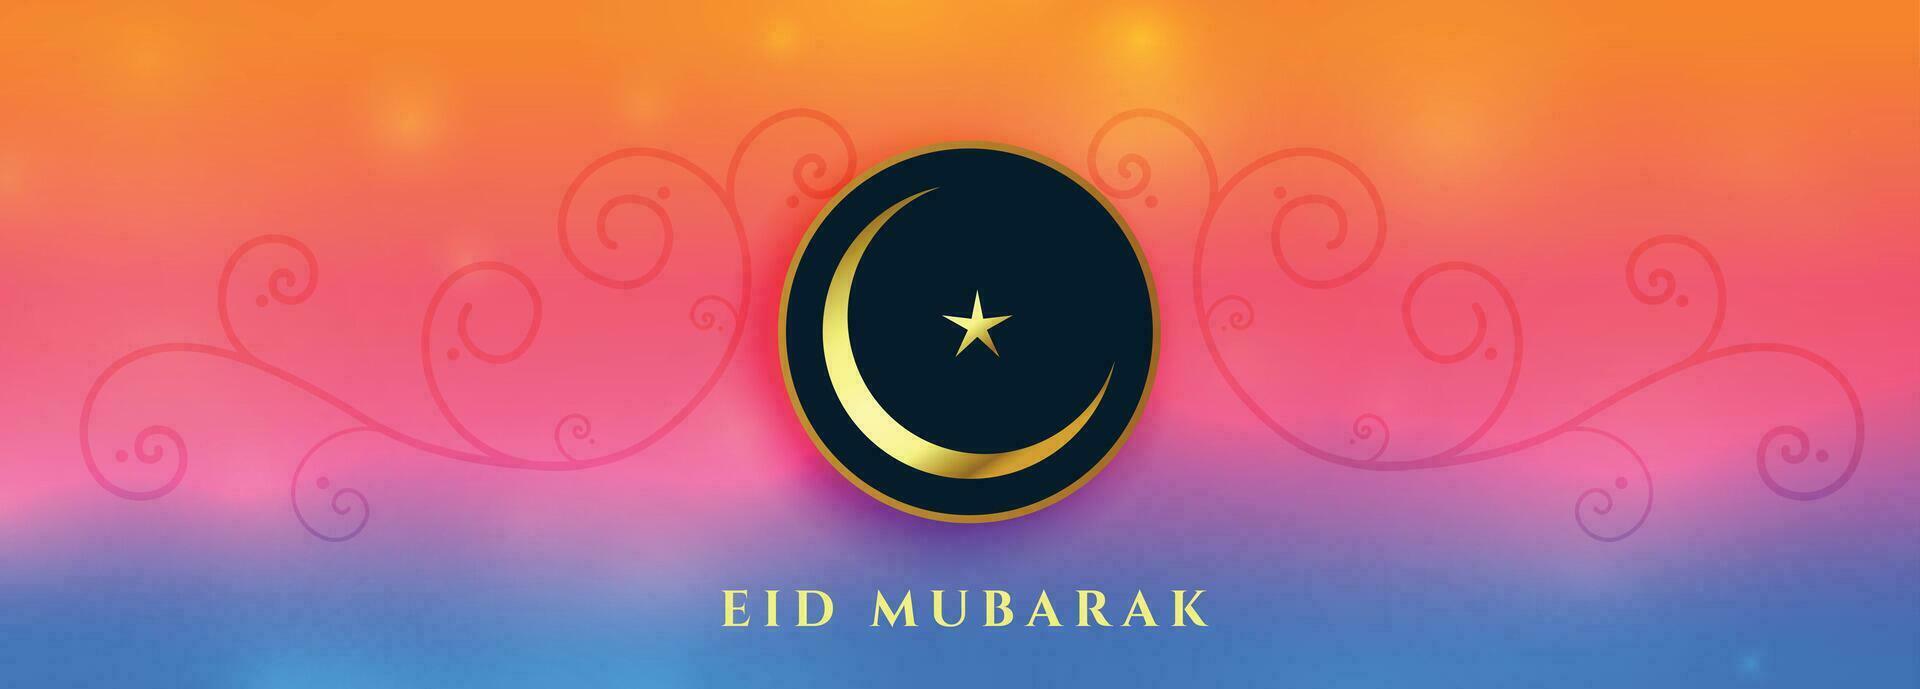 beautiful eid mubarak colorful banner design vector